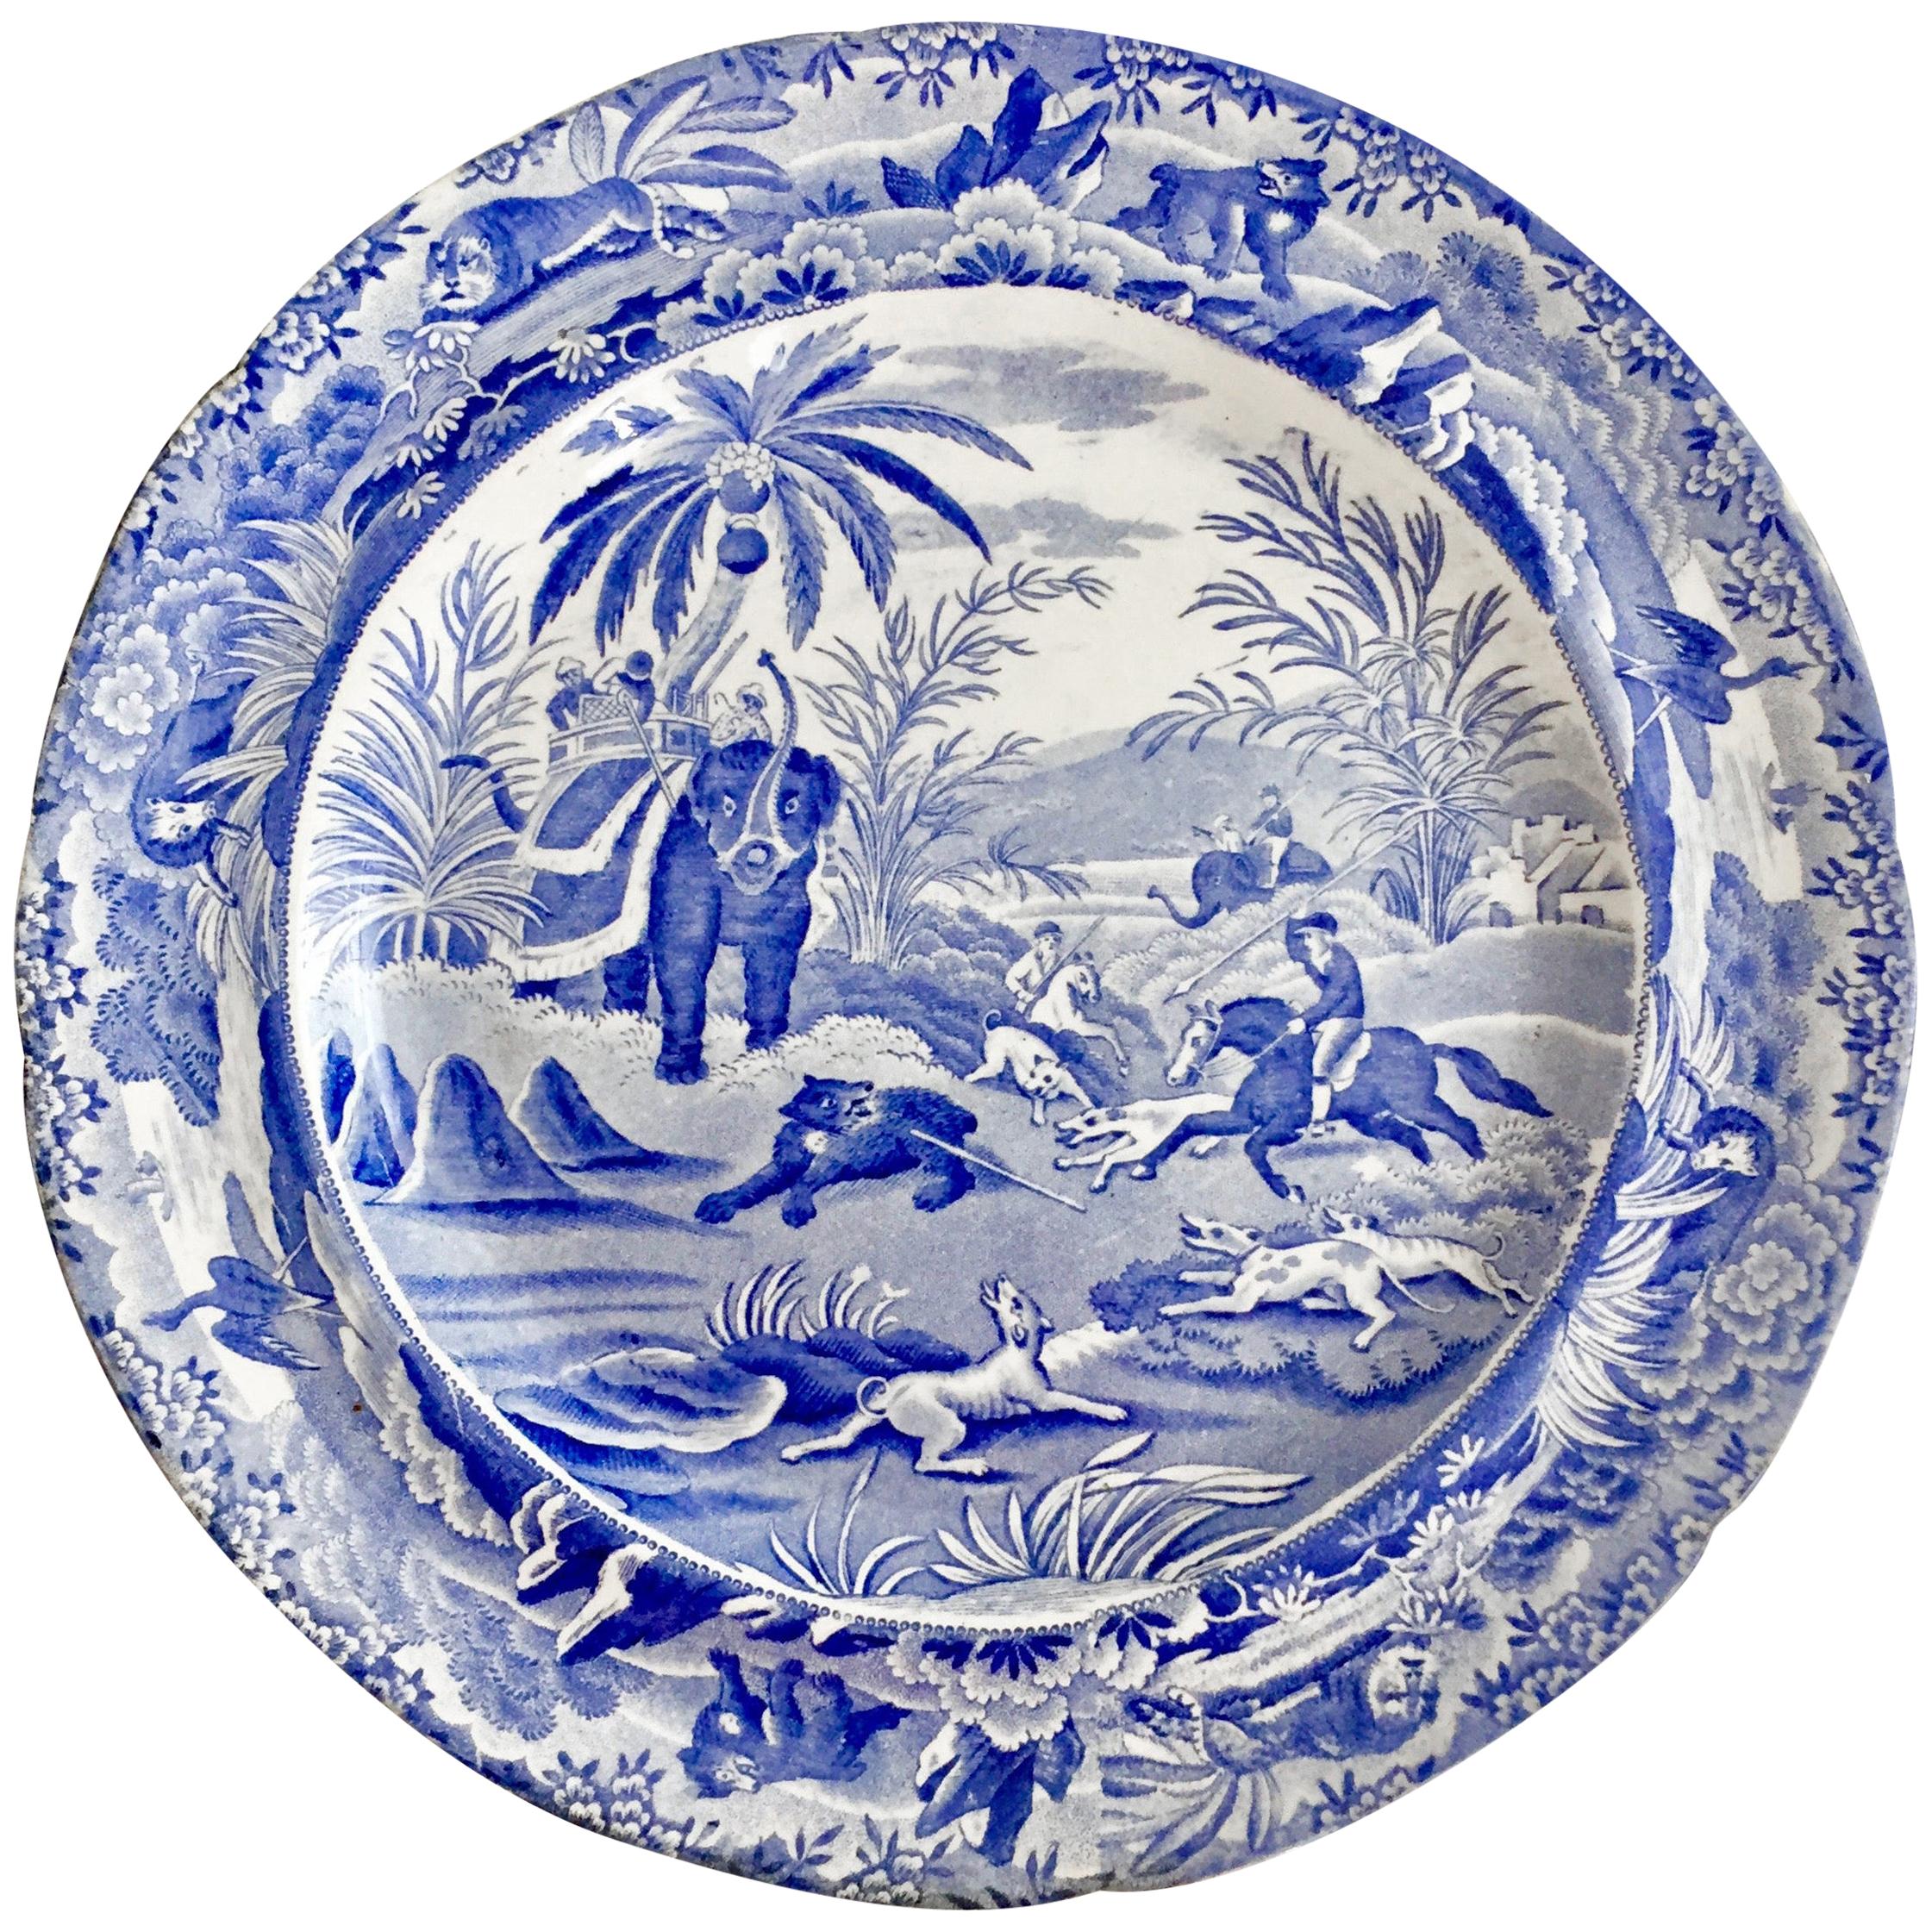 Copeland & Garrett Pearlware Plate, Blue & White "Death Of The Bear", 1833-1847